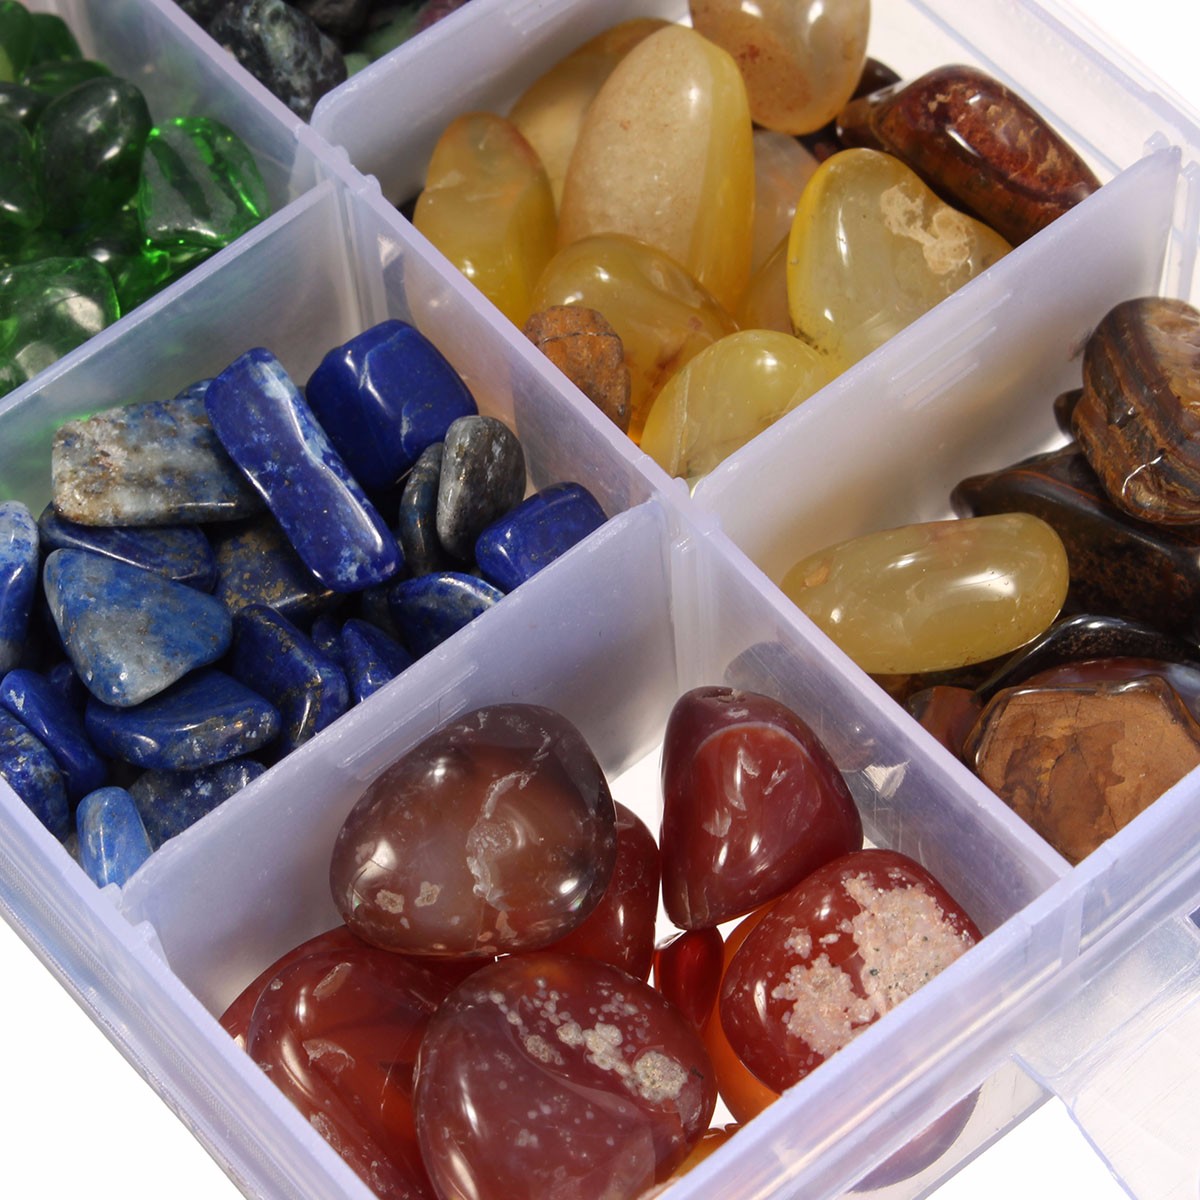 Set 10 Kinds Stone Chakras Crystal Healing Tumbled Natural Quartz Crystal Stones Minerals Irregular Shape Decorative With Box